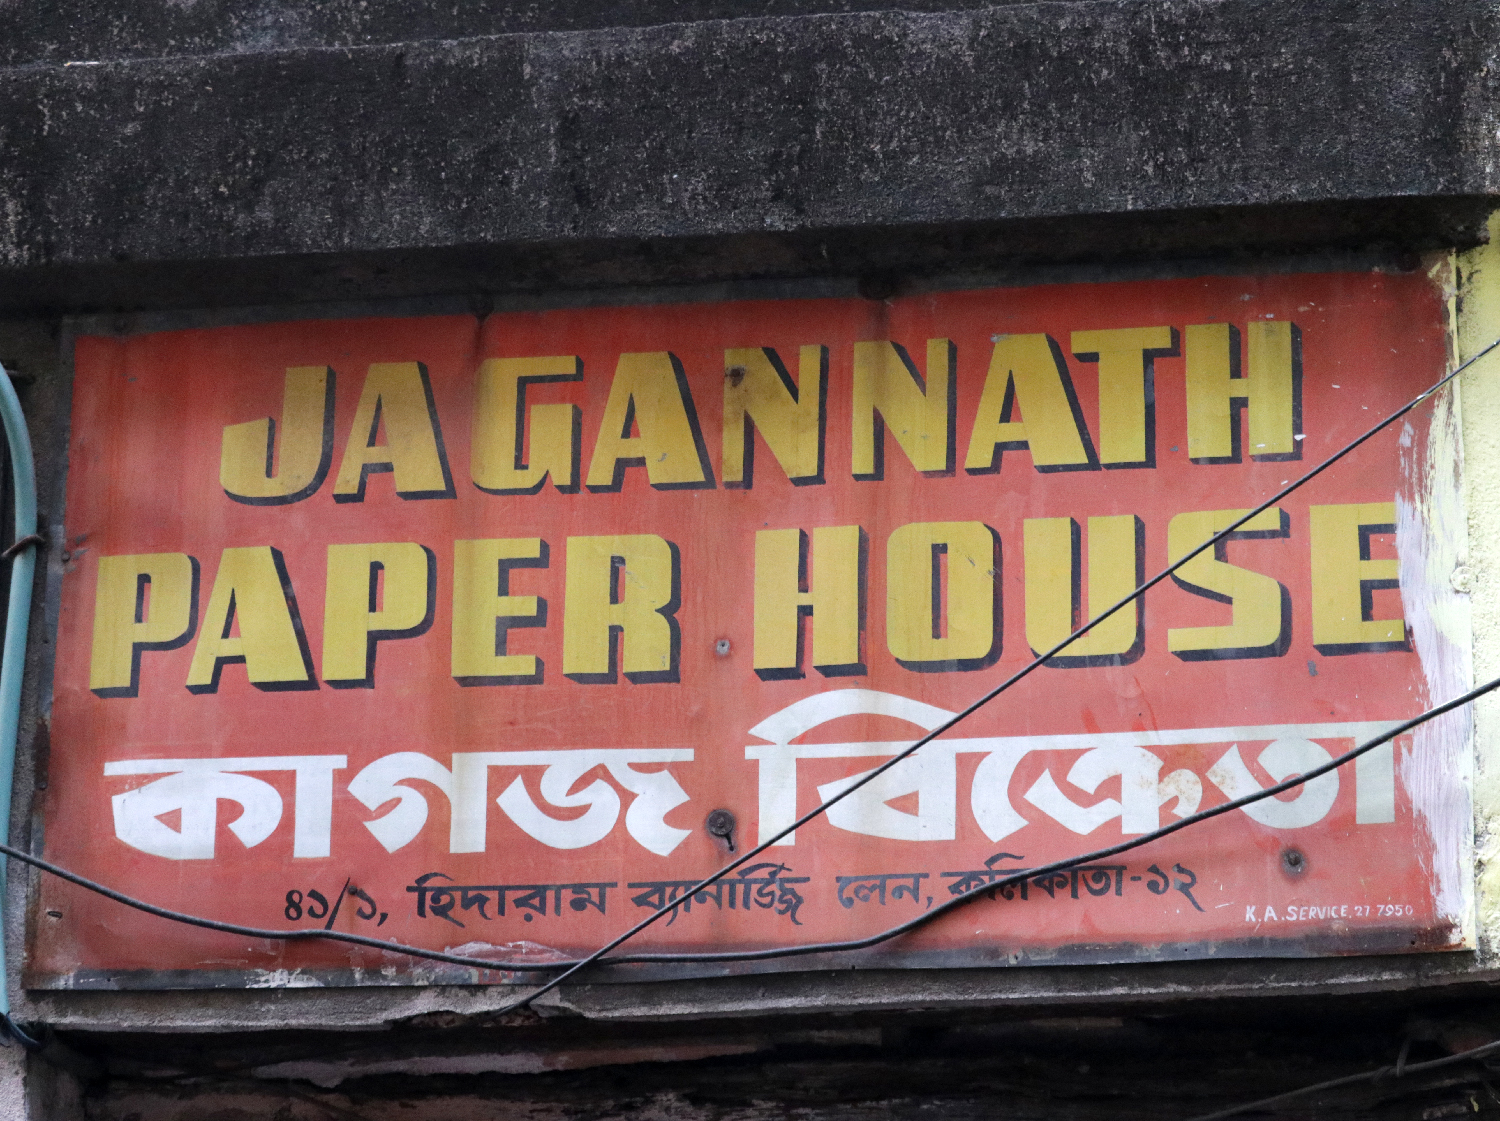 Jagannath Paper House